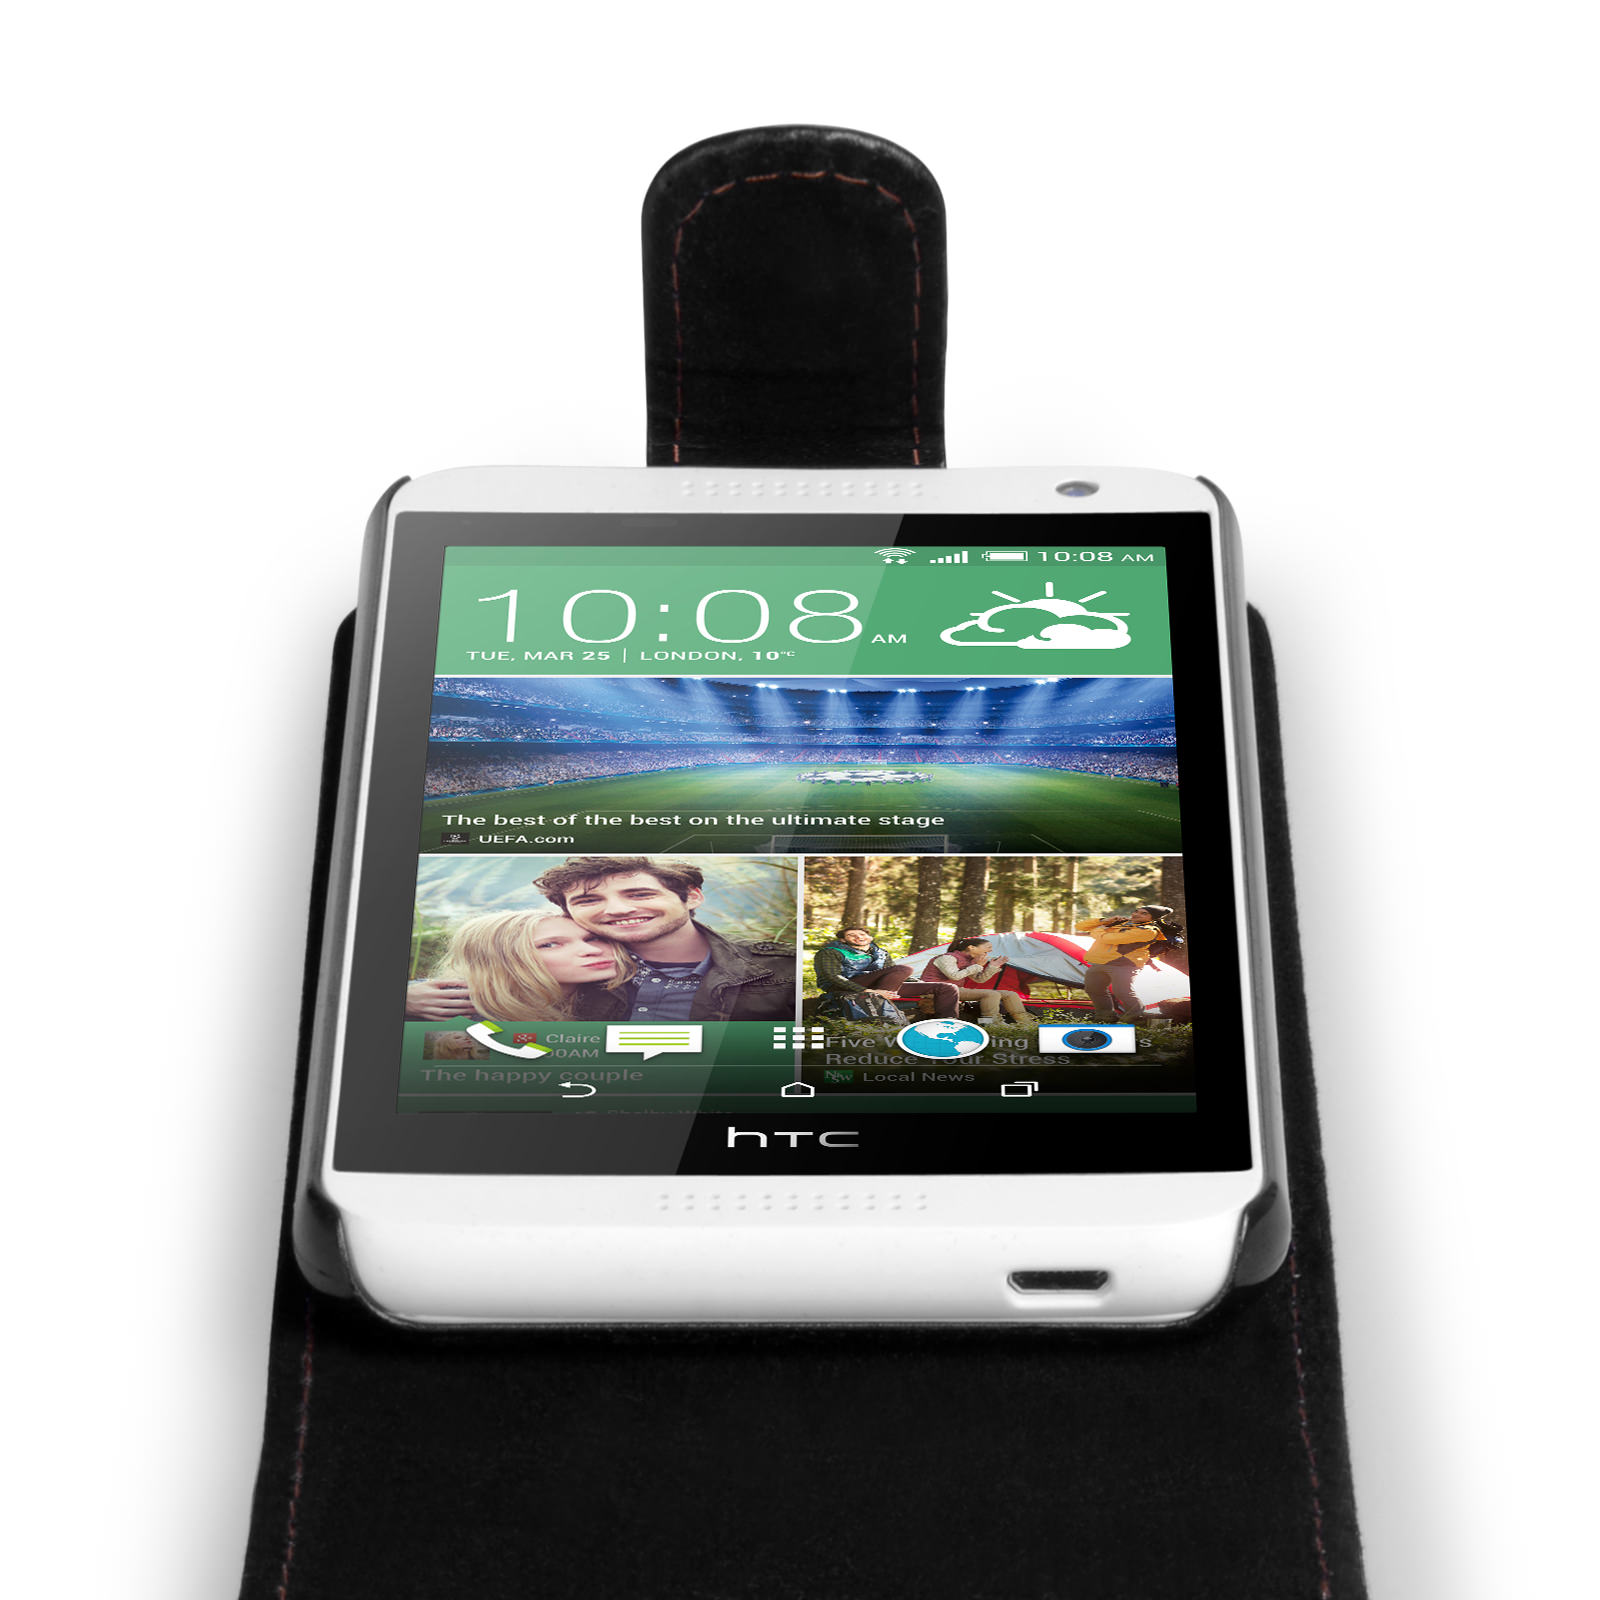 YouSave Accessories HTC Desire 610 Leather-Effect Flip Case - Black